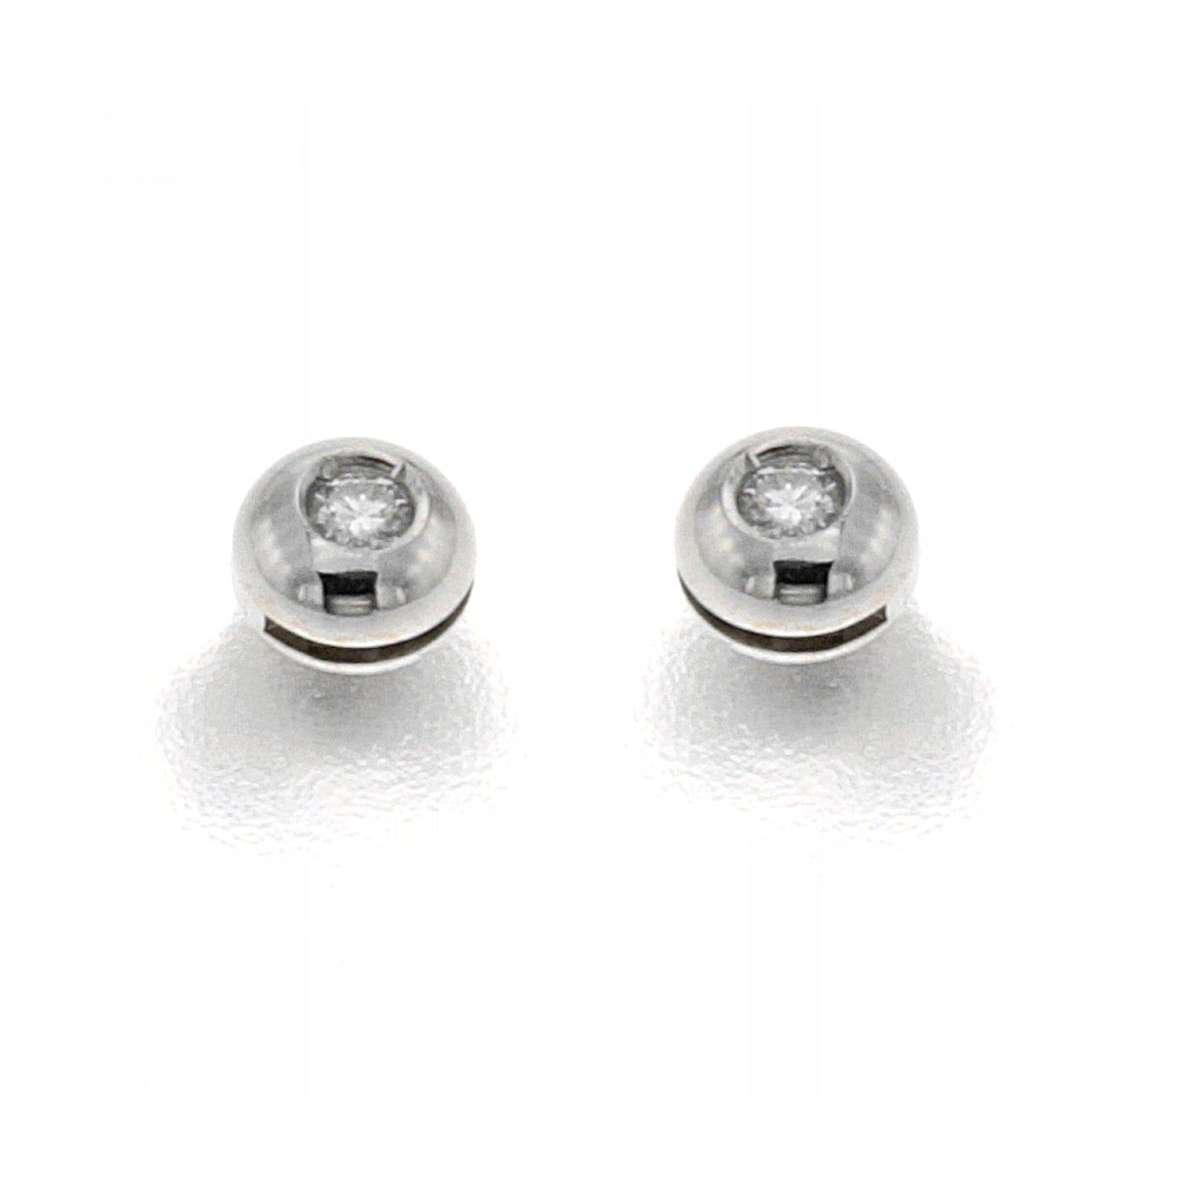 Solitaire cipollina earrings 0.13 carats diamonds G-VVS1